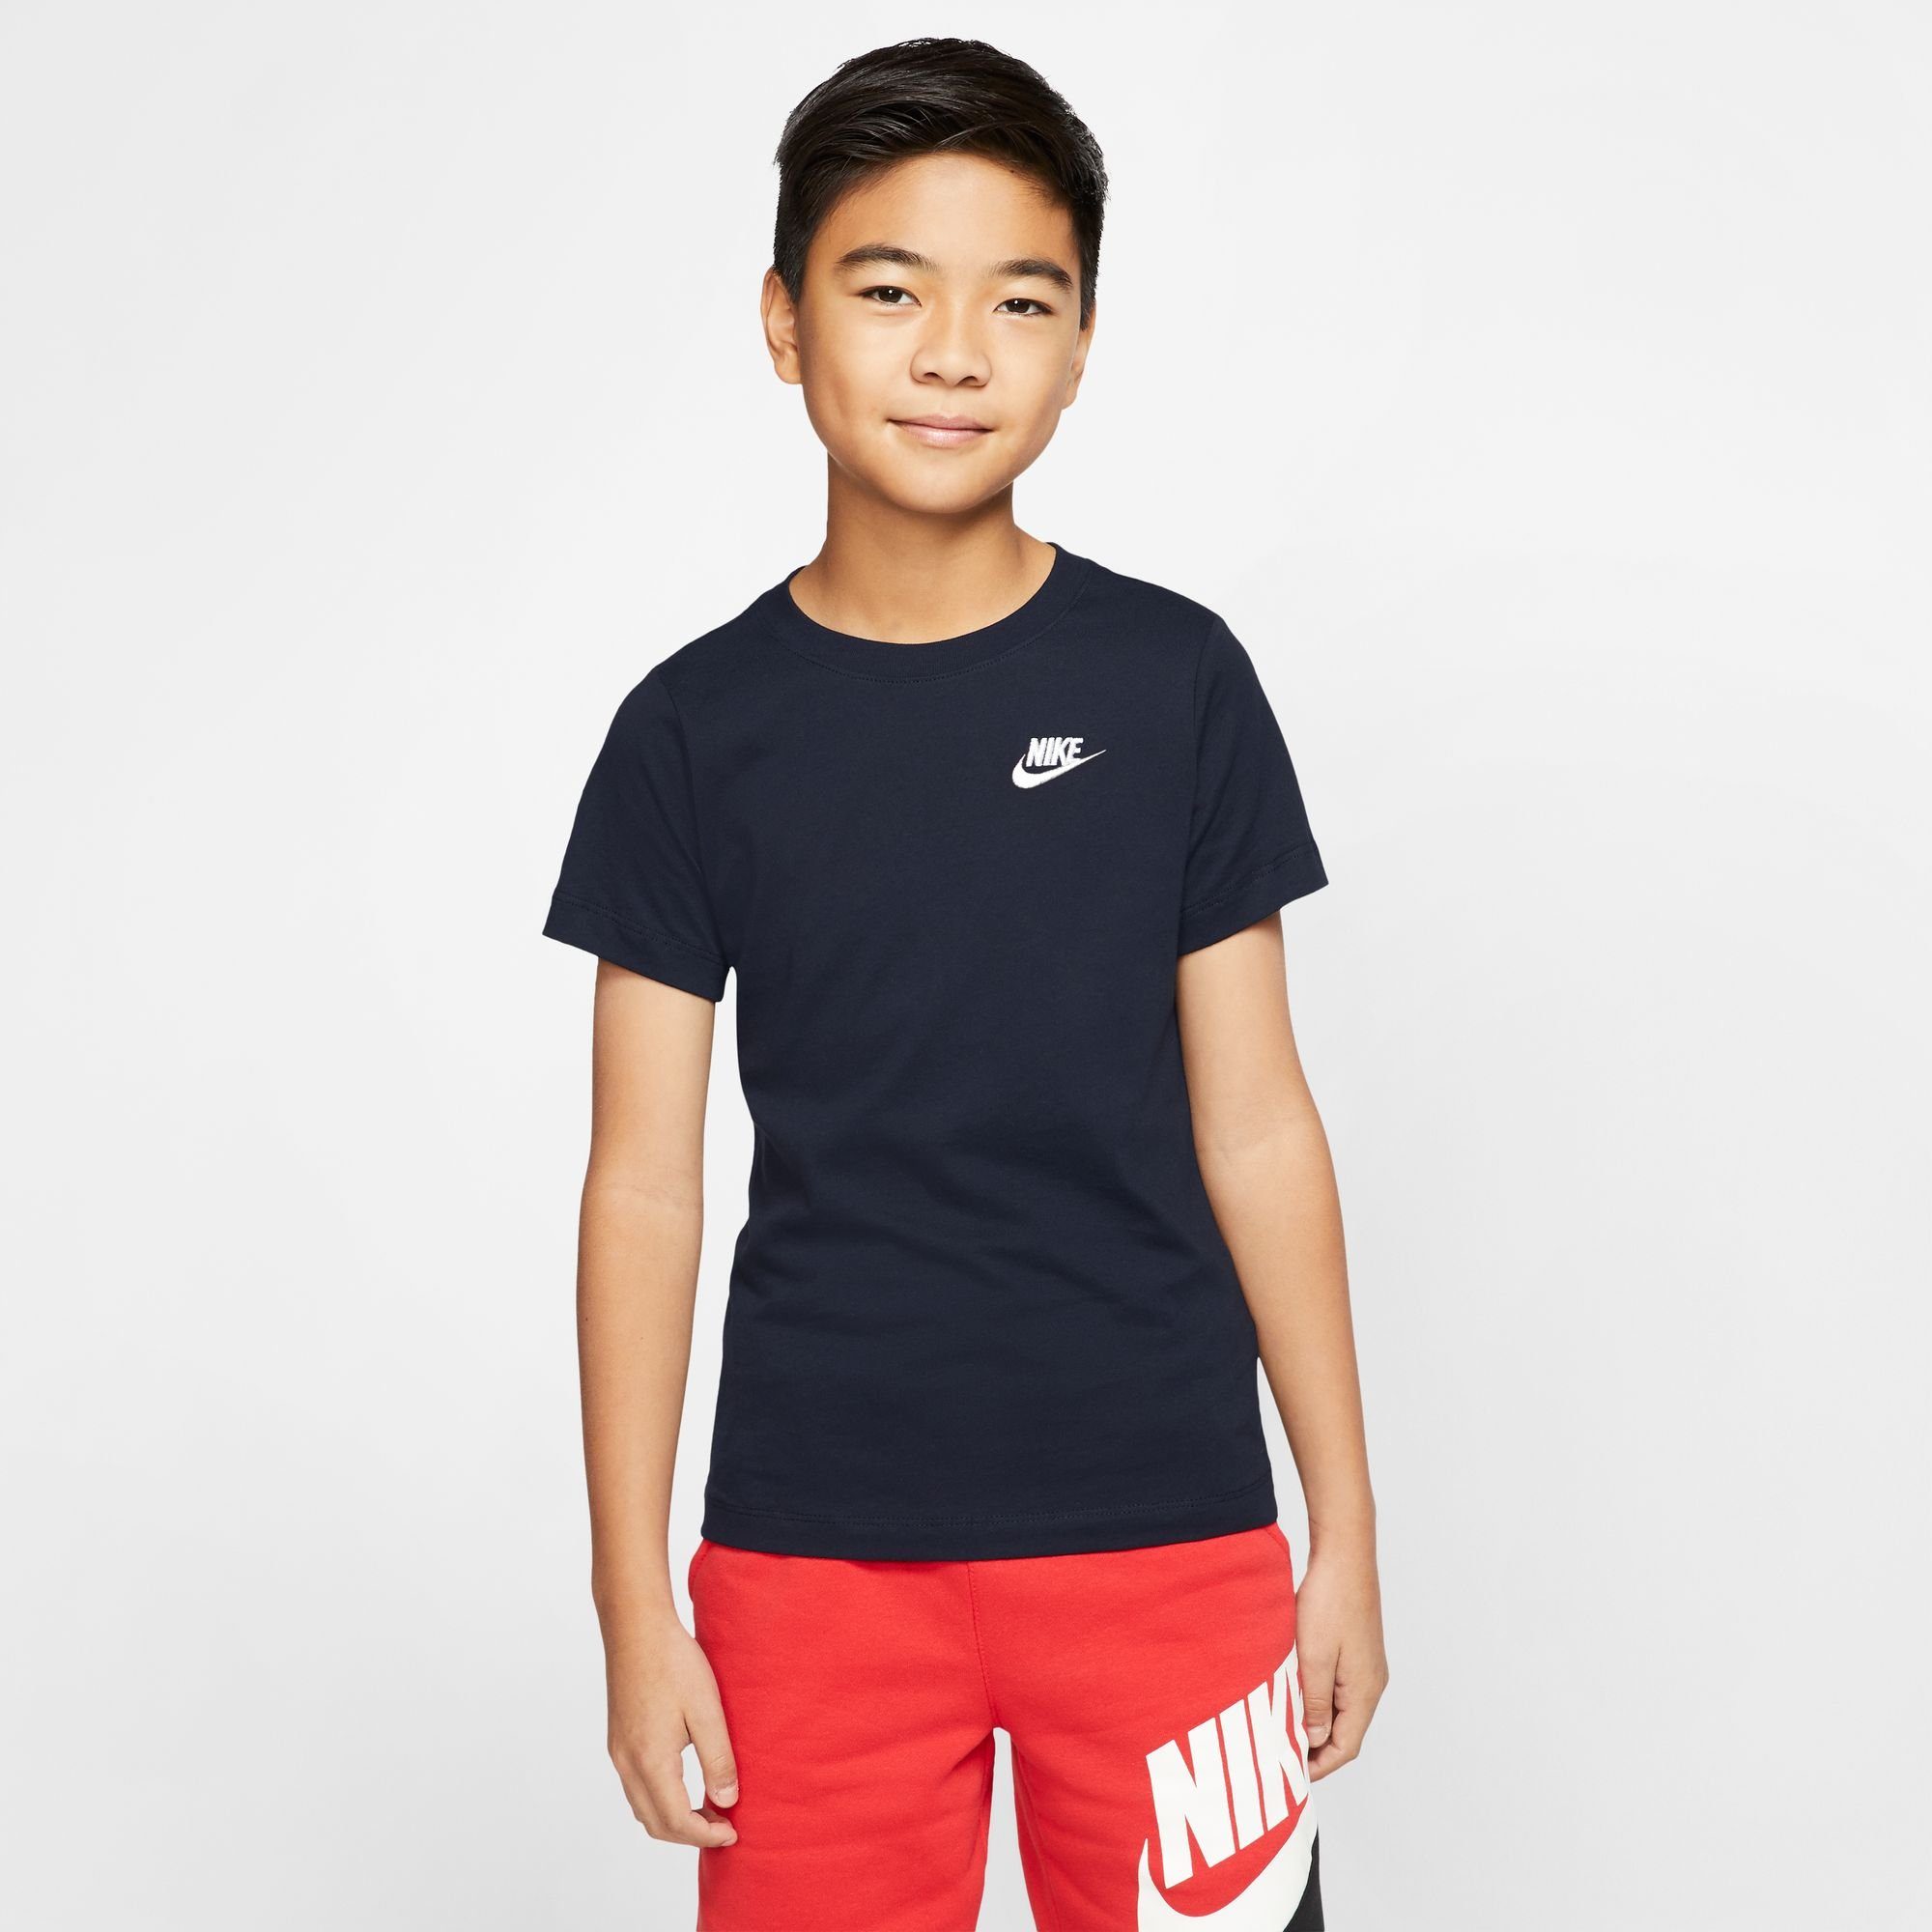 Nike KIDS' BIG T-Shirt T-SHIRT marine Sportswear